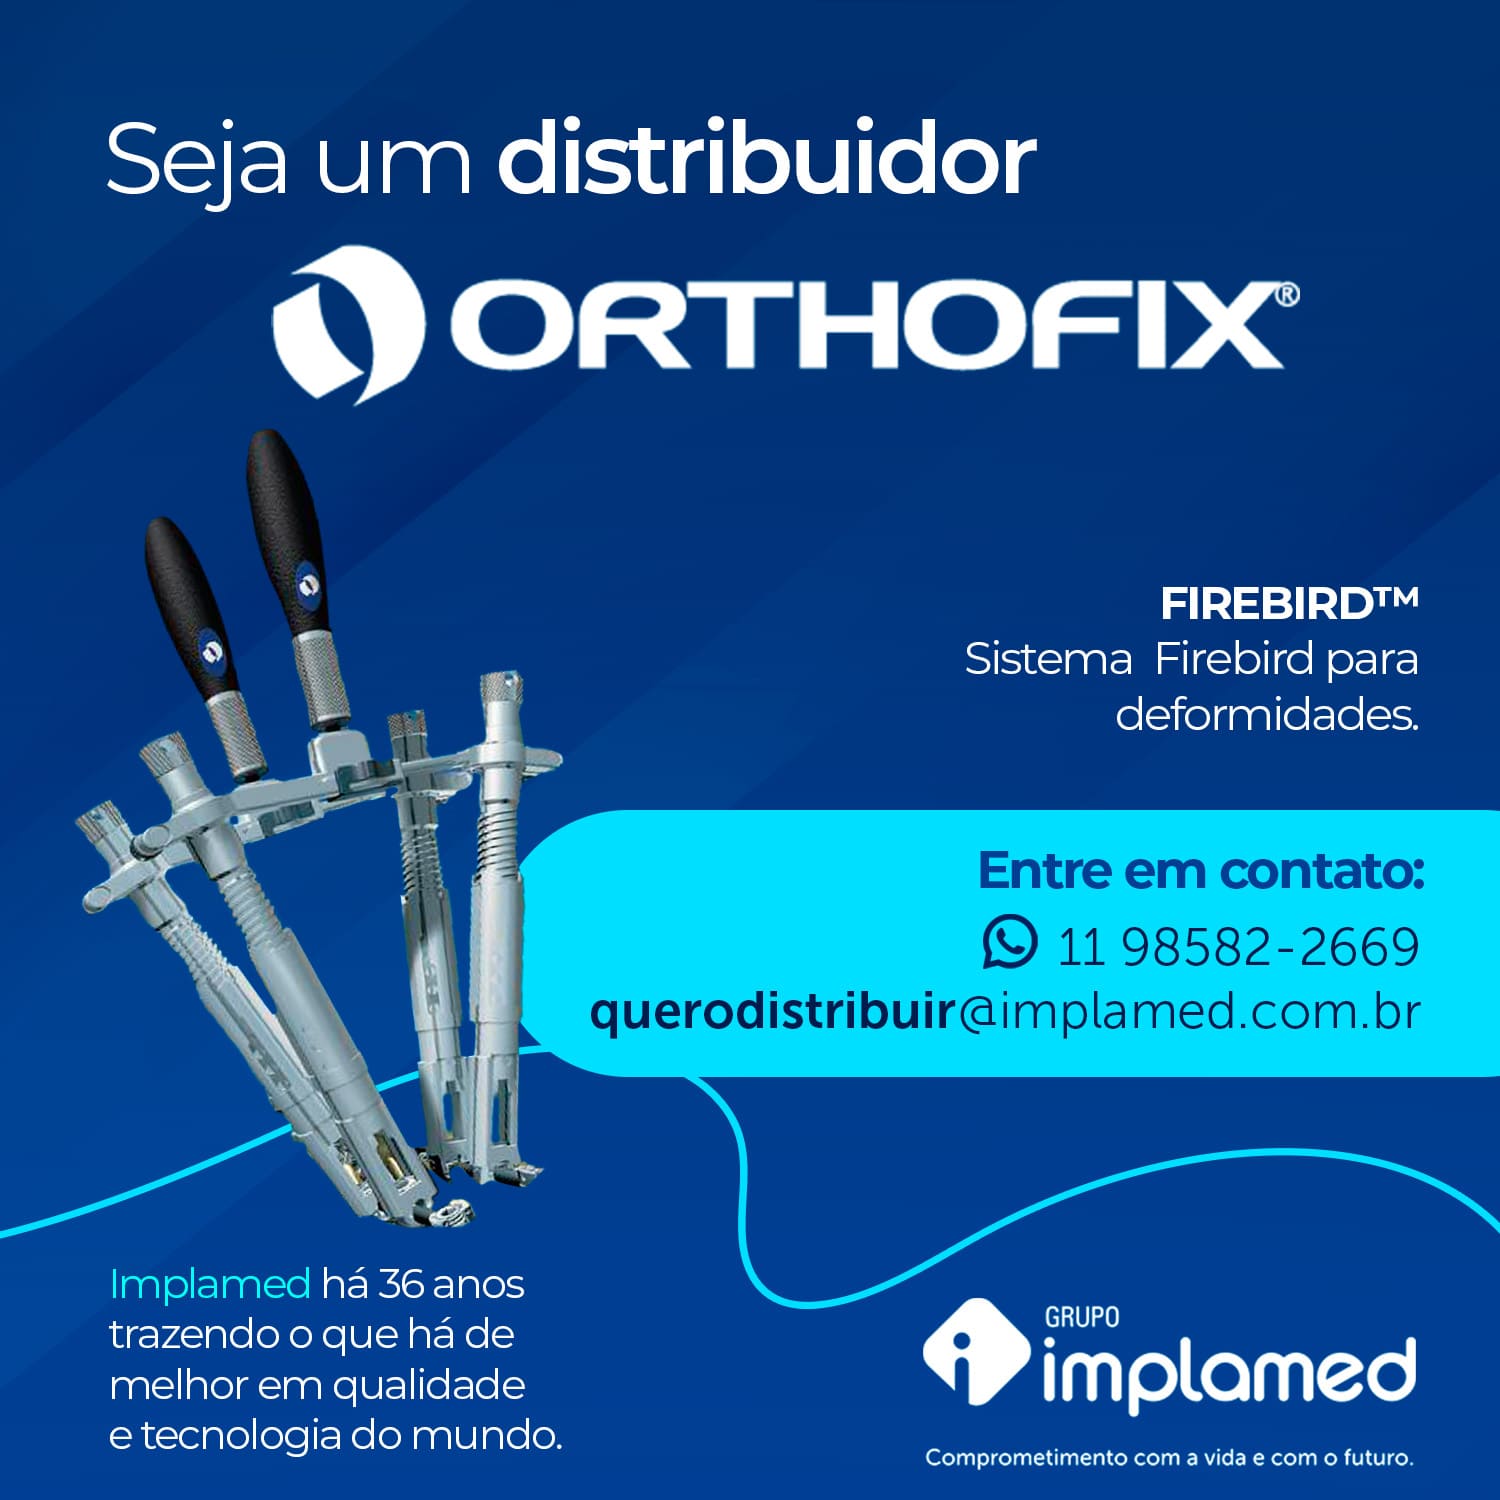 Seja um distribuidor - Orthofix Firebird